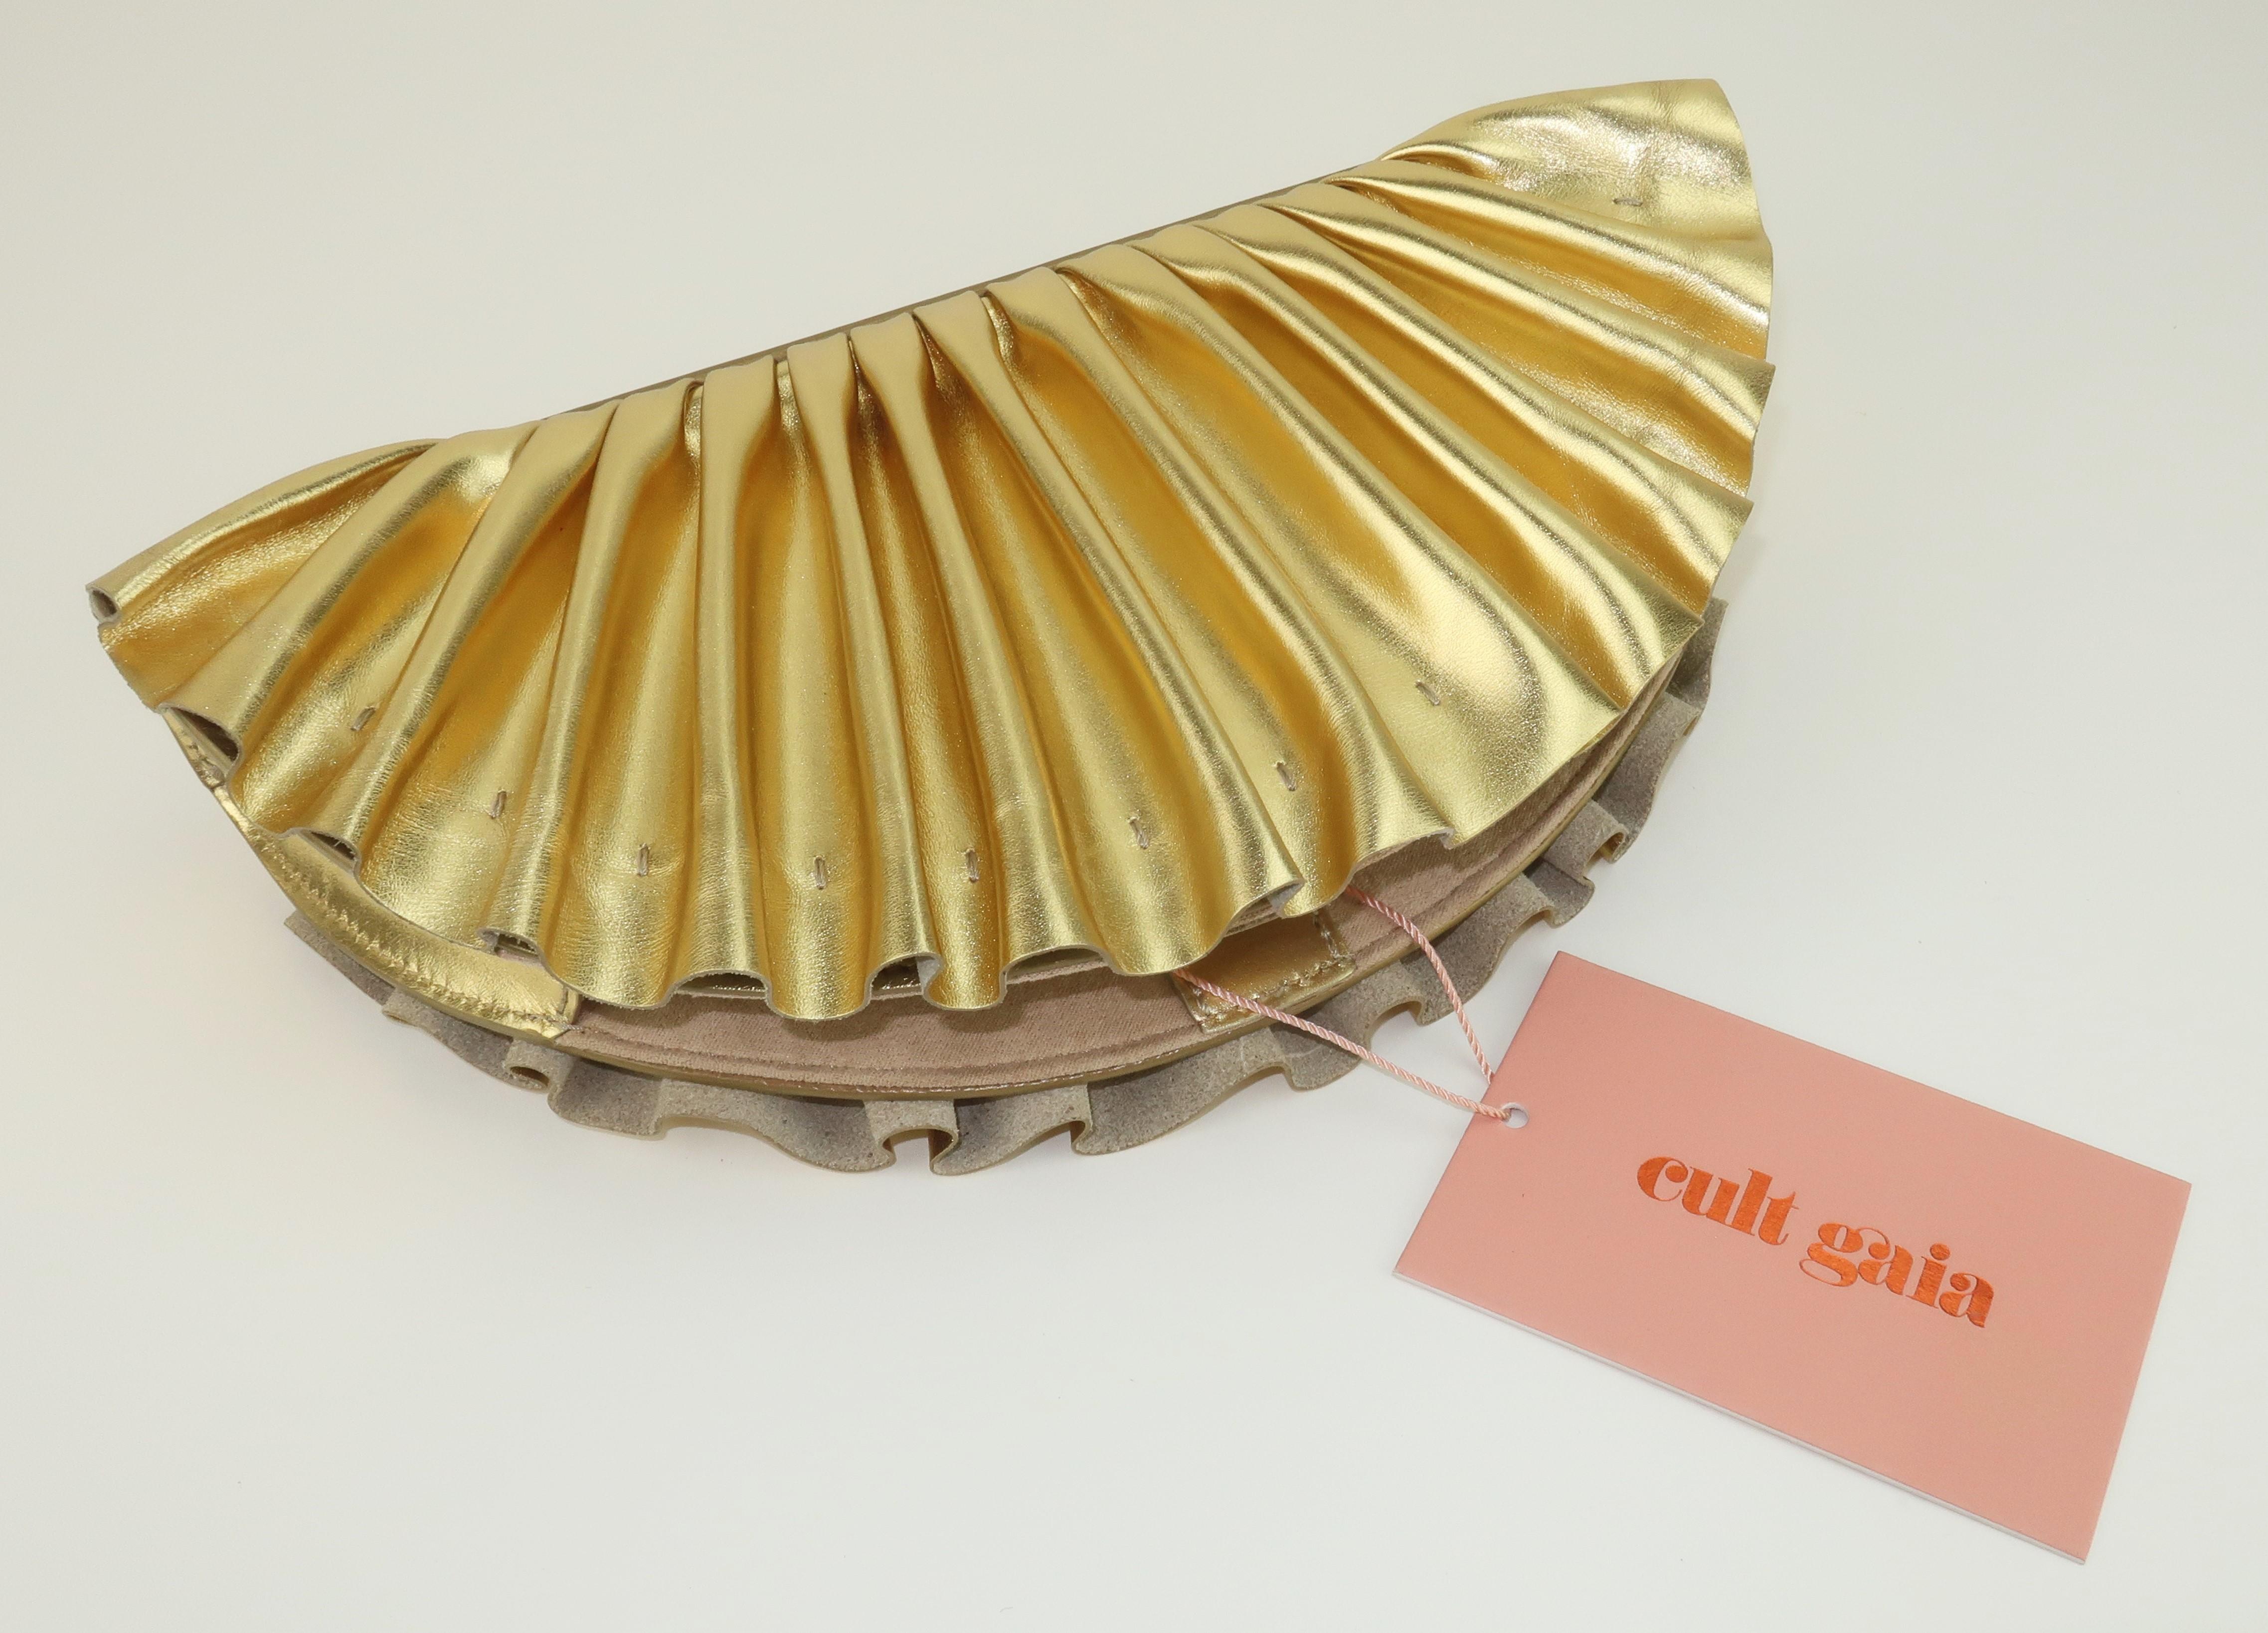 Cult Gaia Nala Gold Leather Fan Clutch Handbag 1